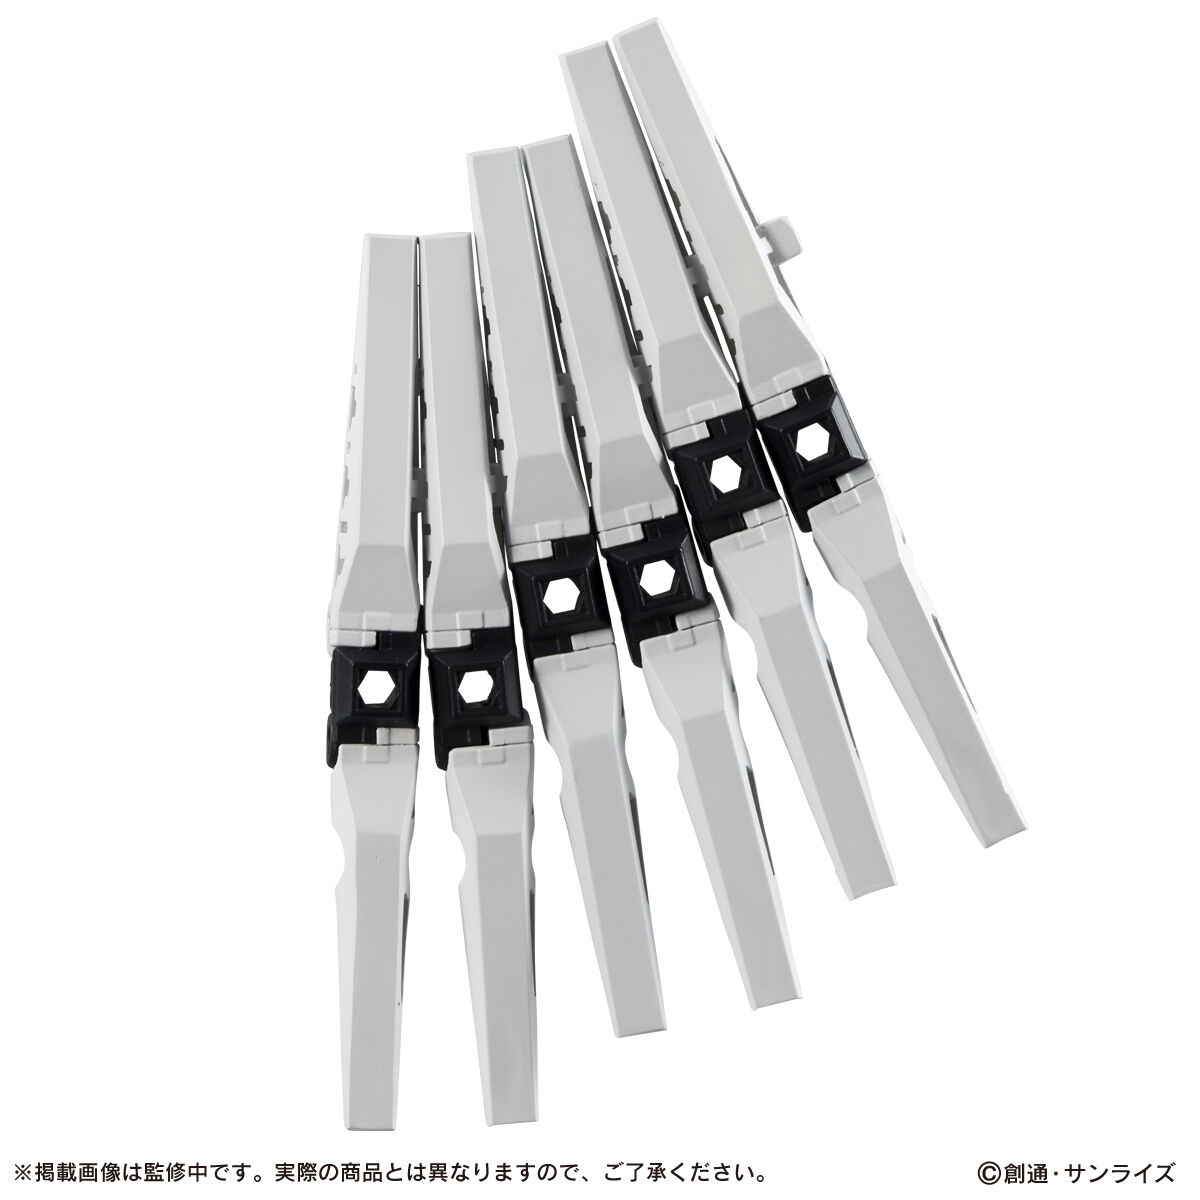 MS Ensemble Fin Funnel Expansion Parts for RX-93 ν Gundam